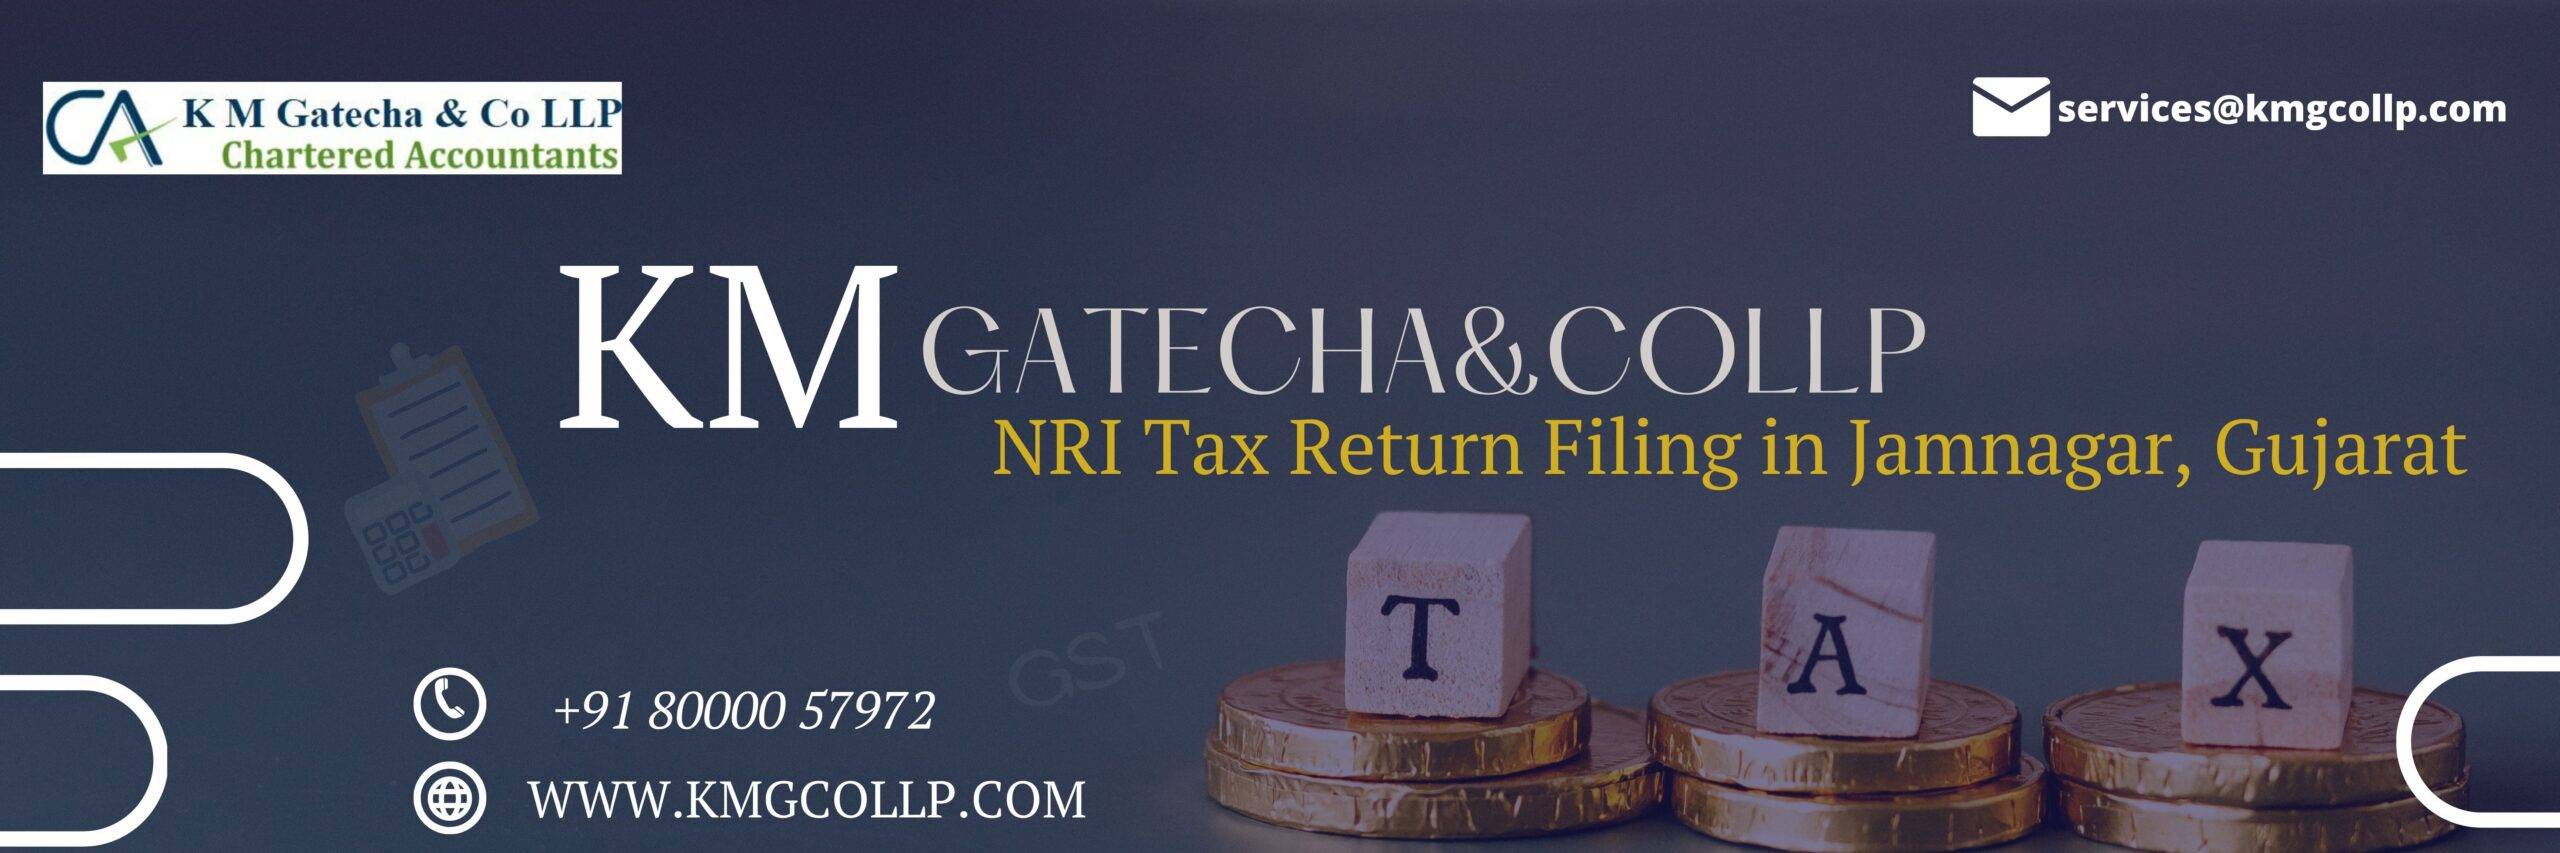 NRI Tax Return Filing in Jamnagar